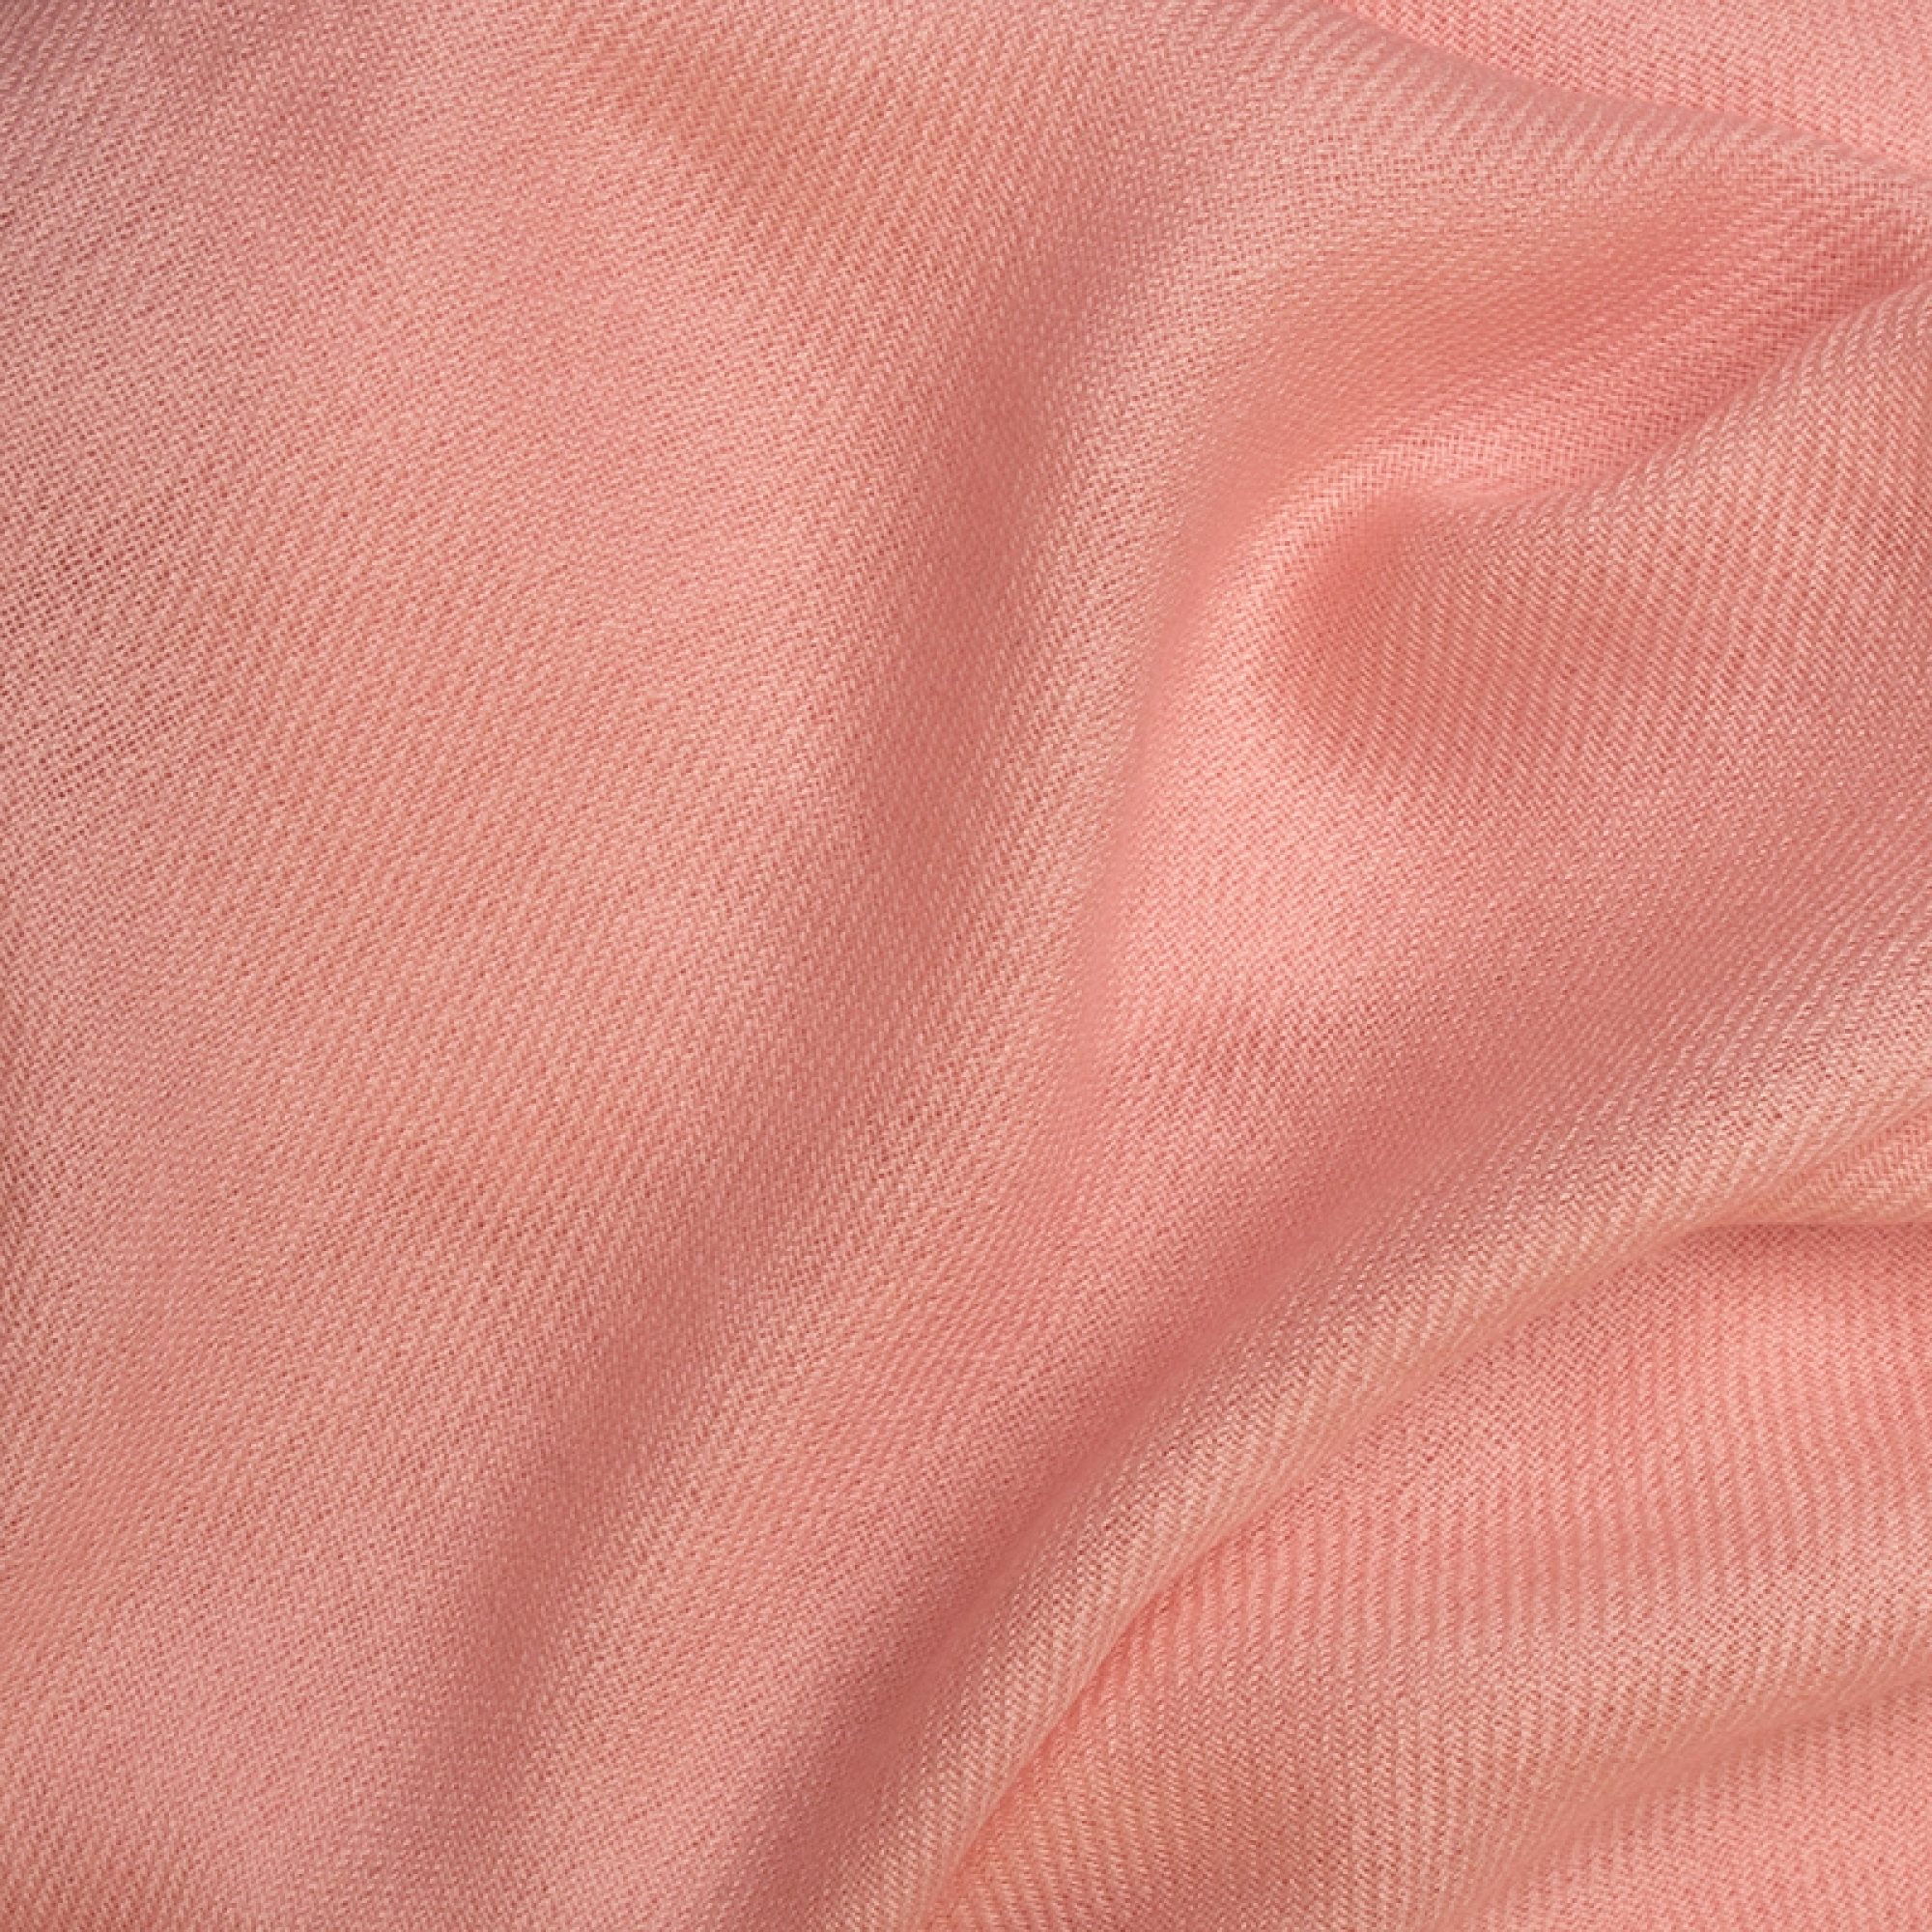 Cashmere accessories blanket toodoo plain l 220 x 220 lotus 220x220cm